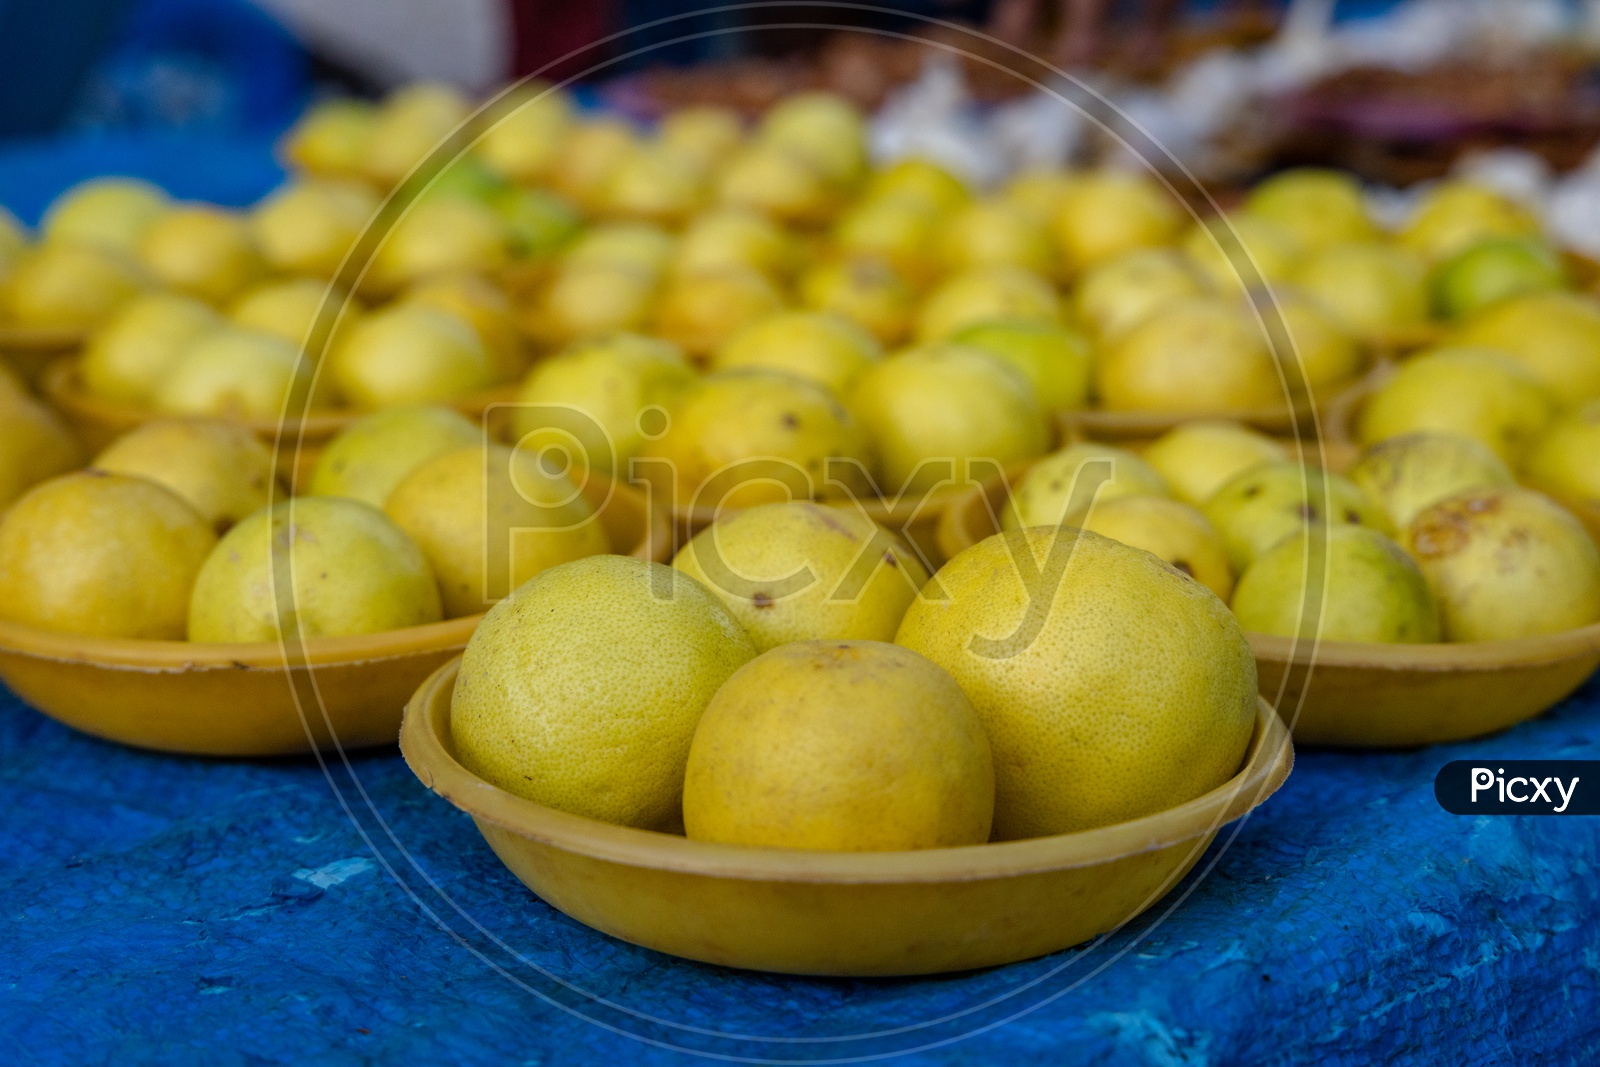 Lemons In Bowls  In a Vegetable Vendor Stall